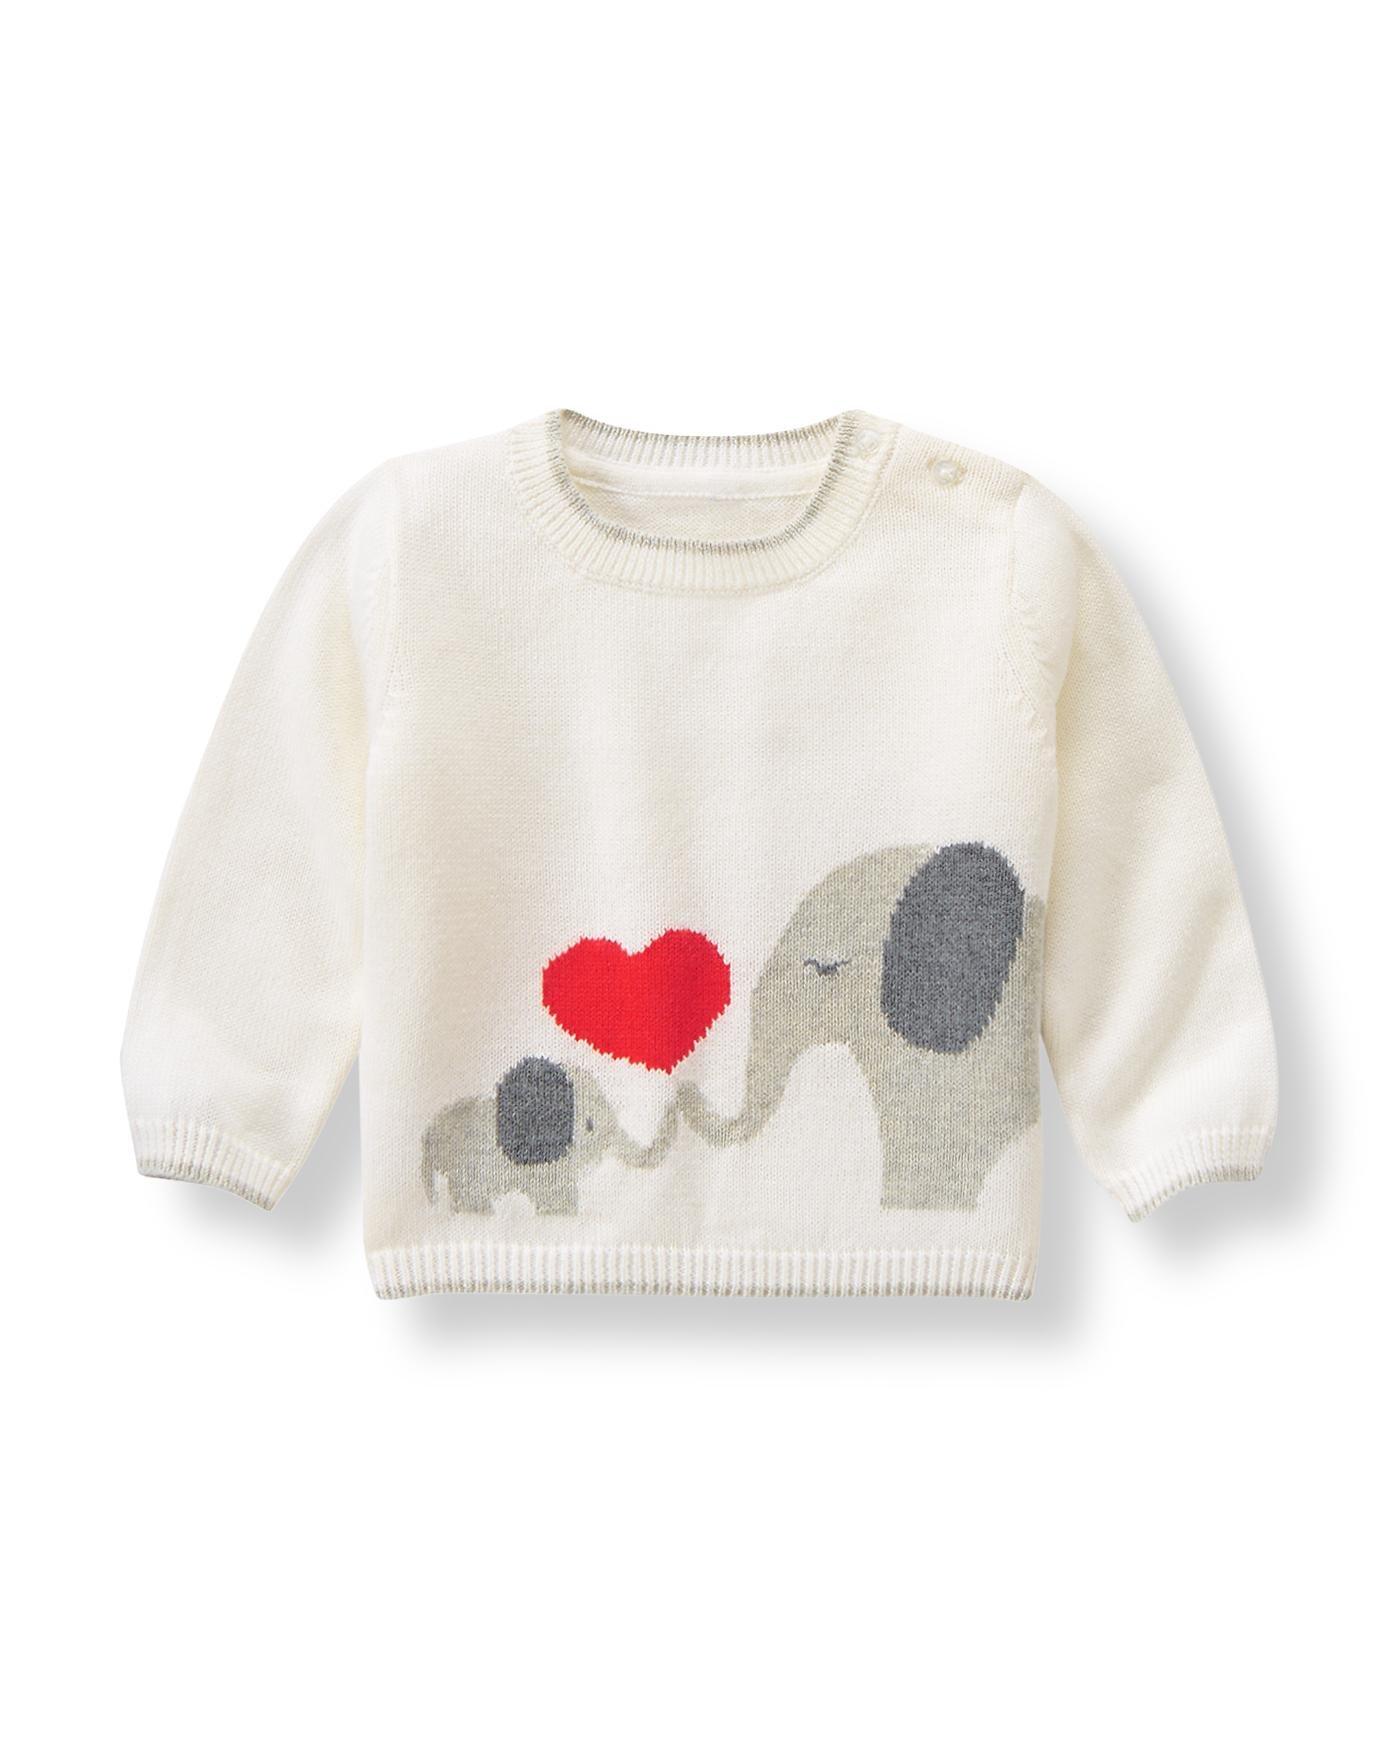 Elephant Valentine Sweater image number 0